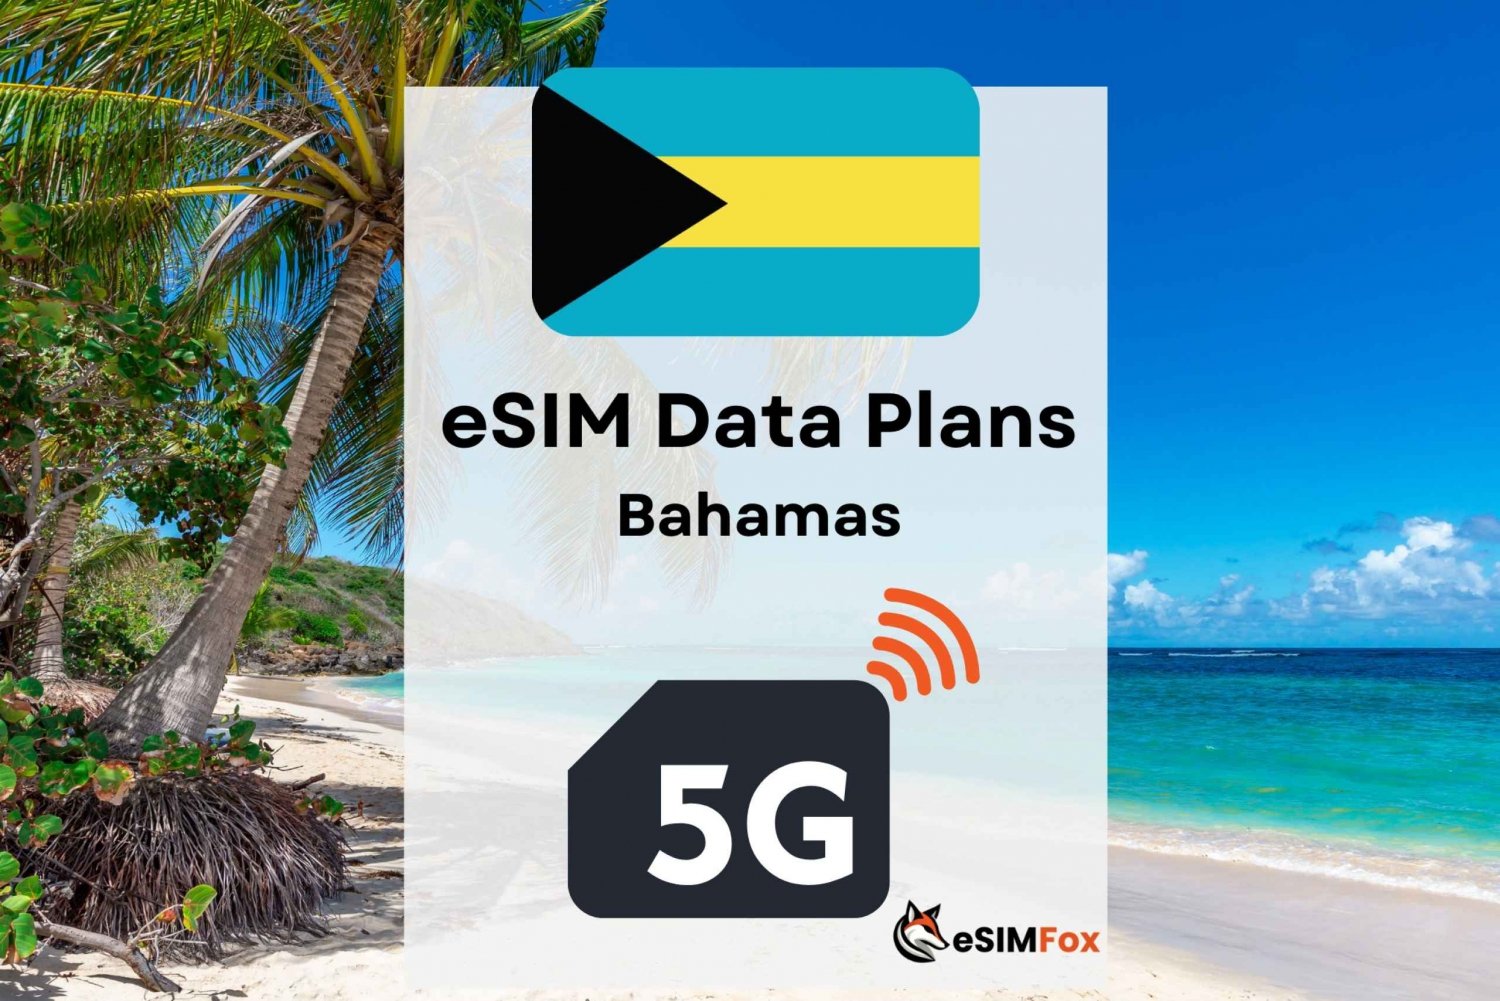 eSIM Internet Data Plan for Bahamas for tourists